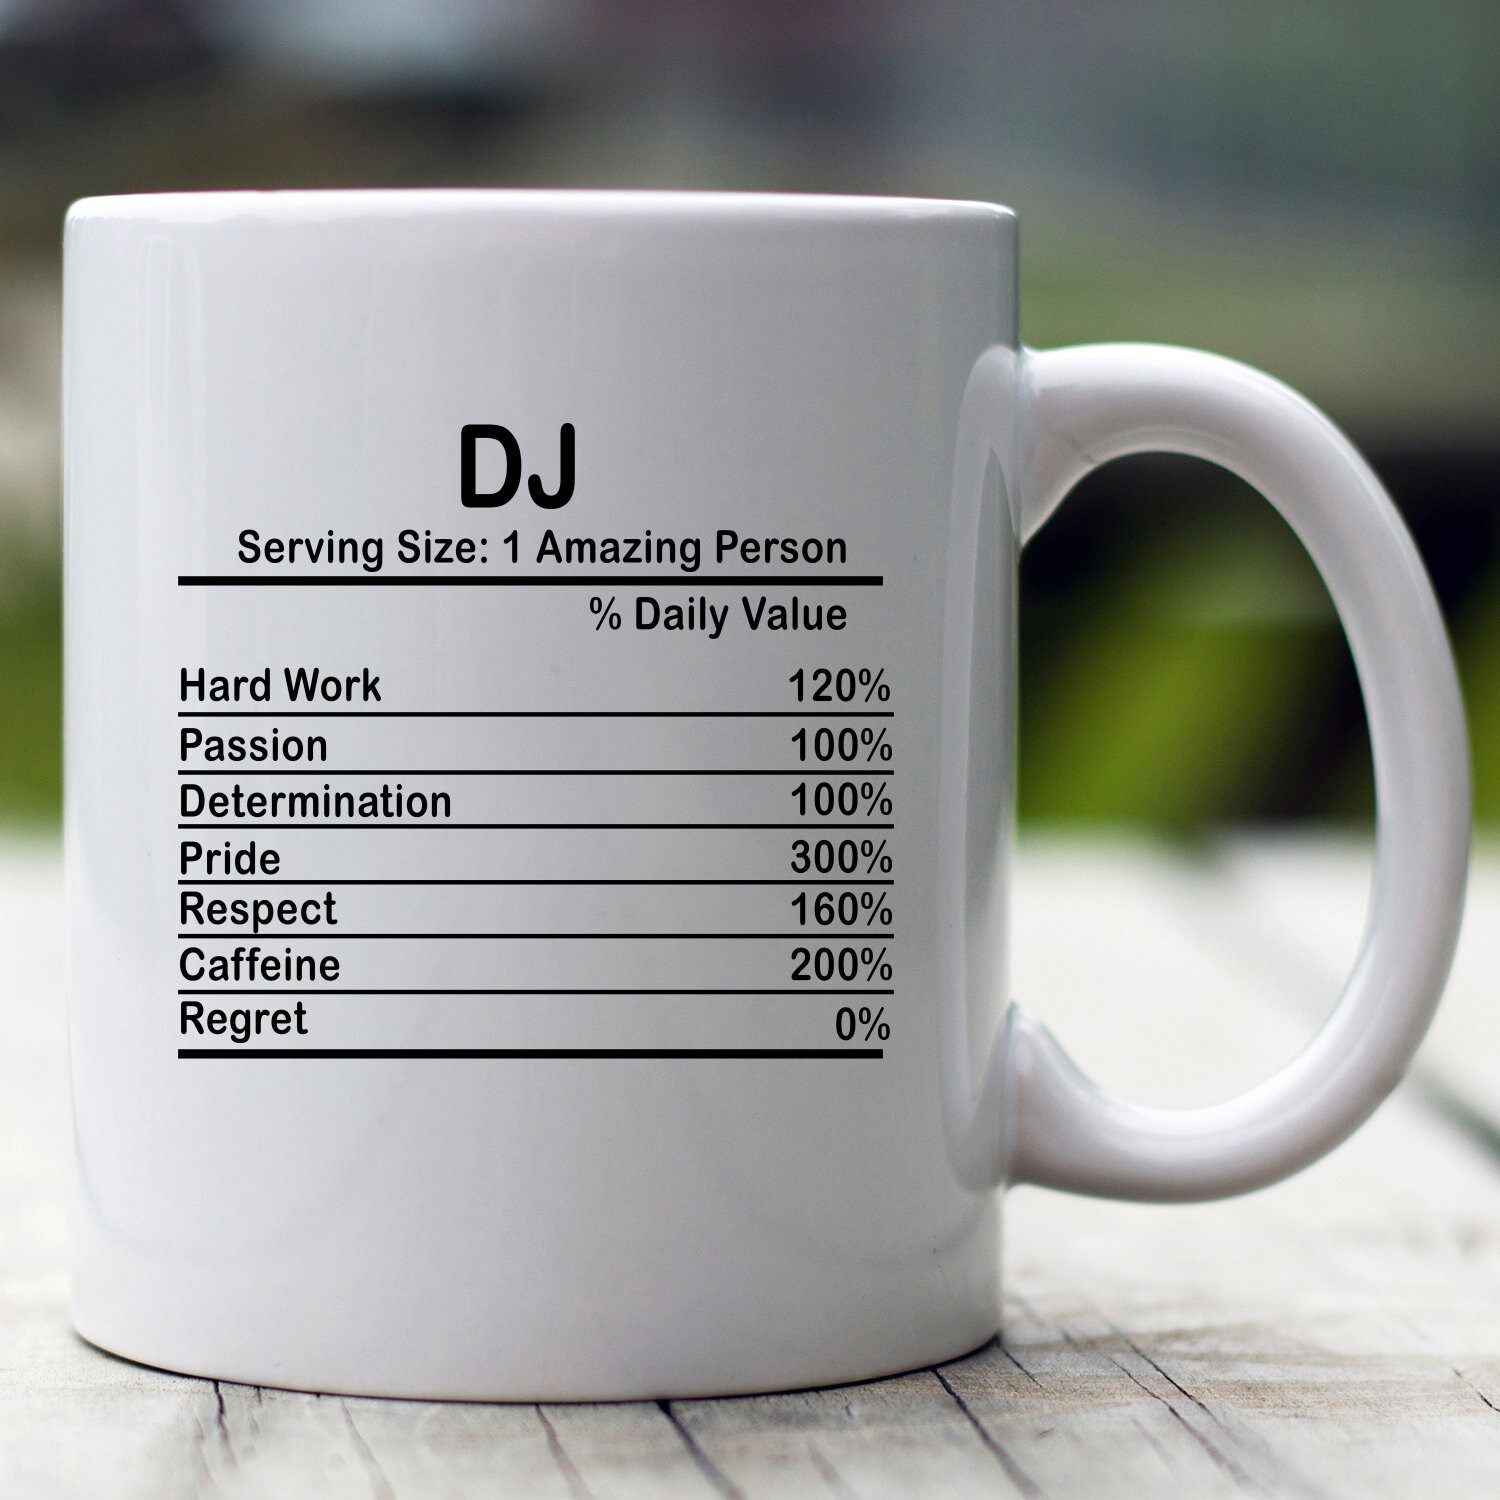 Personalized DJ Mixer Mug. Coffee Mug With Yellow Club Mixer